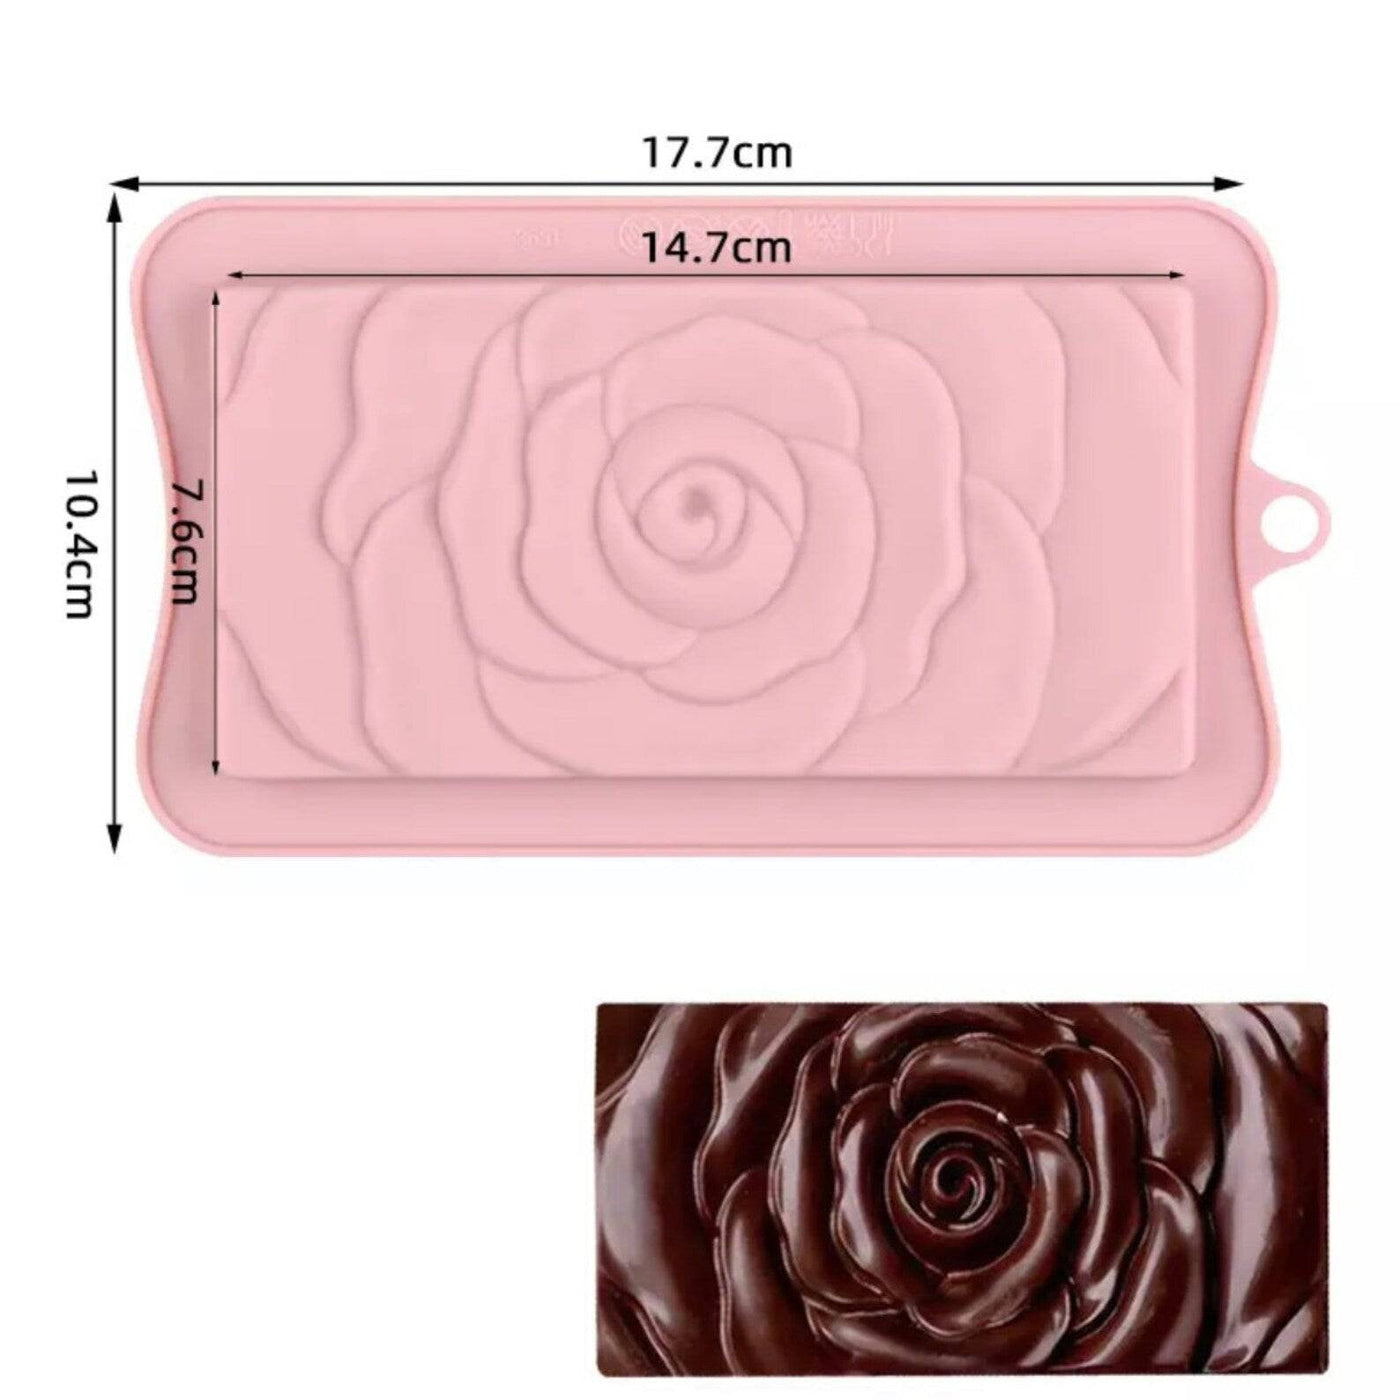 Rose Chocolate Bar Mold - Pink - The Sugar Art, Inc.